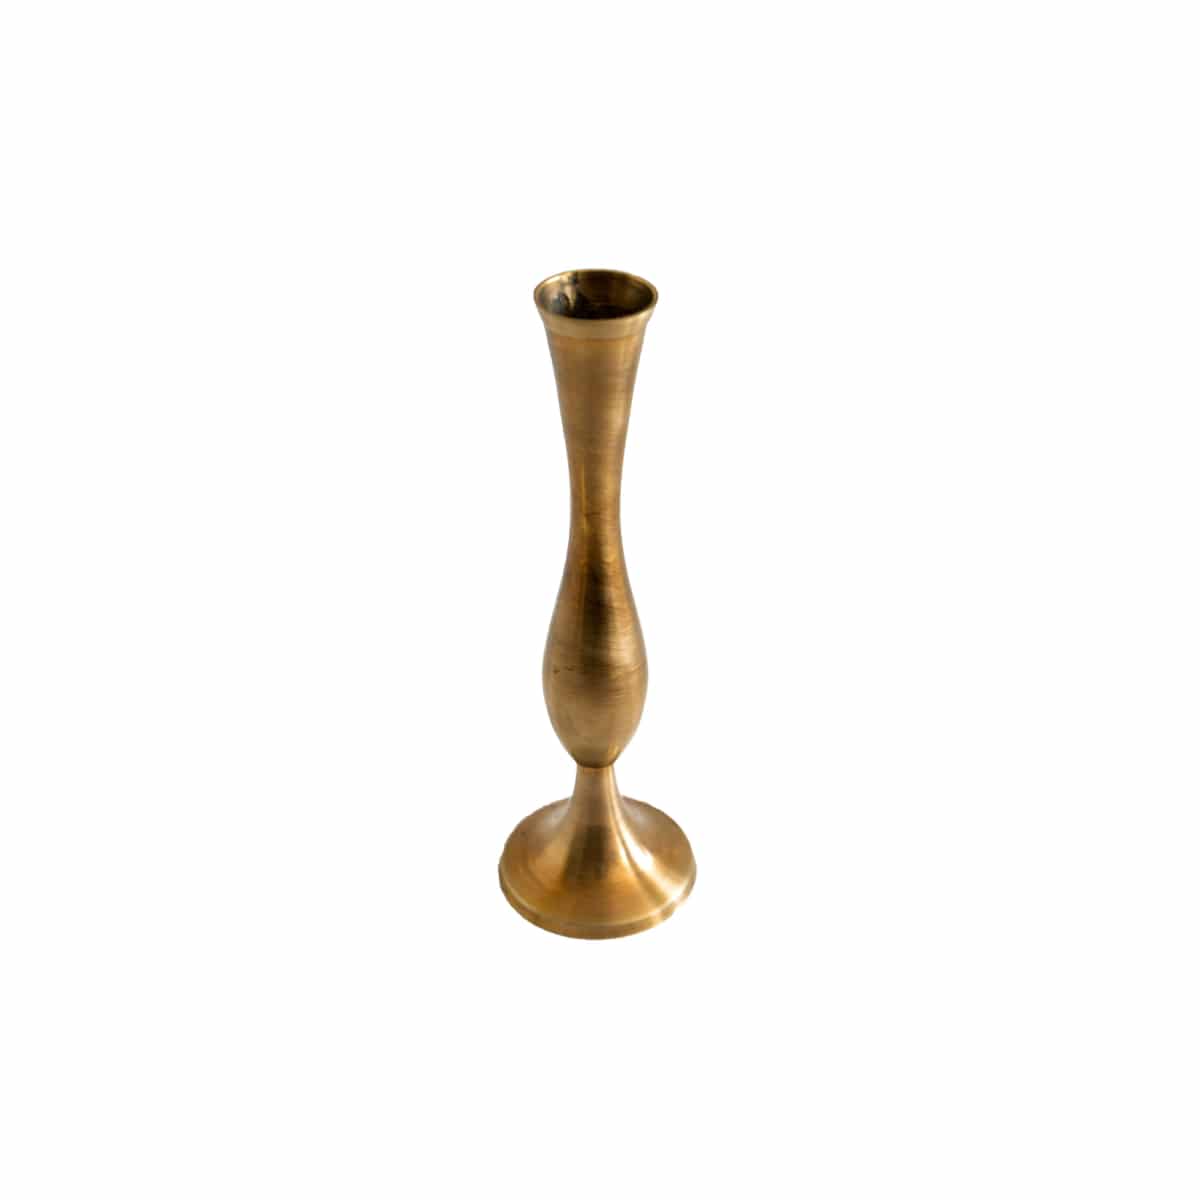  Brass vase tall size 